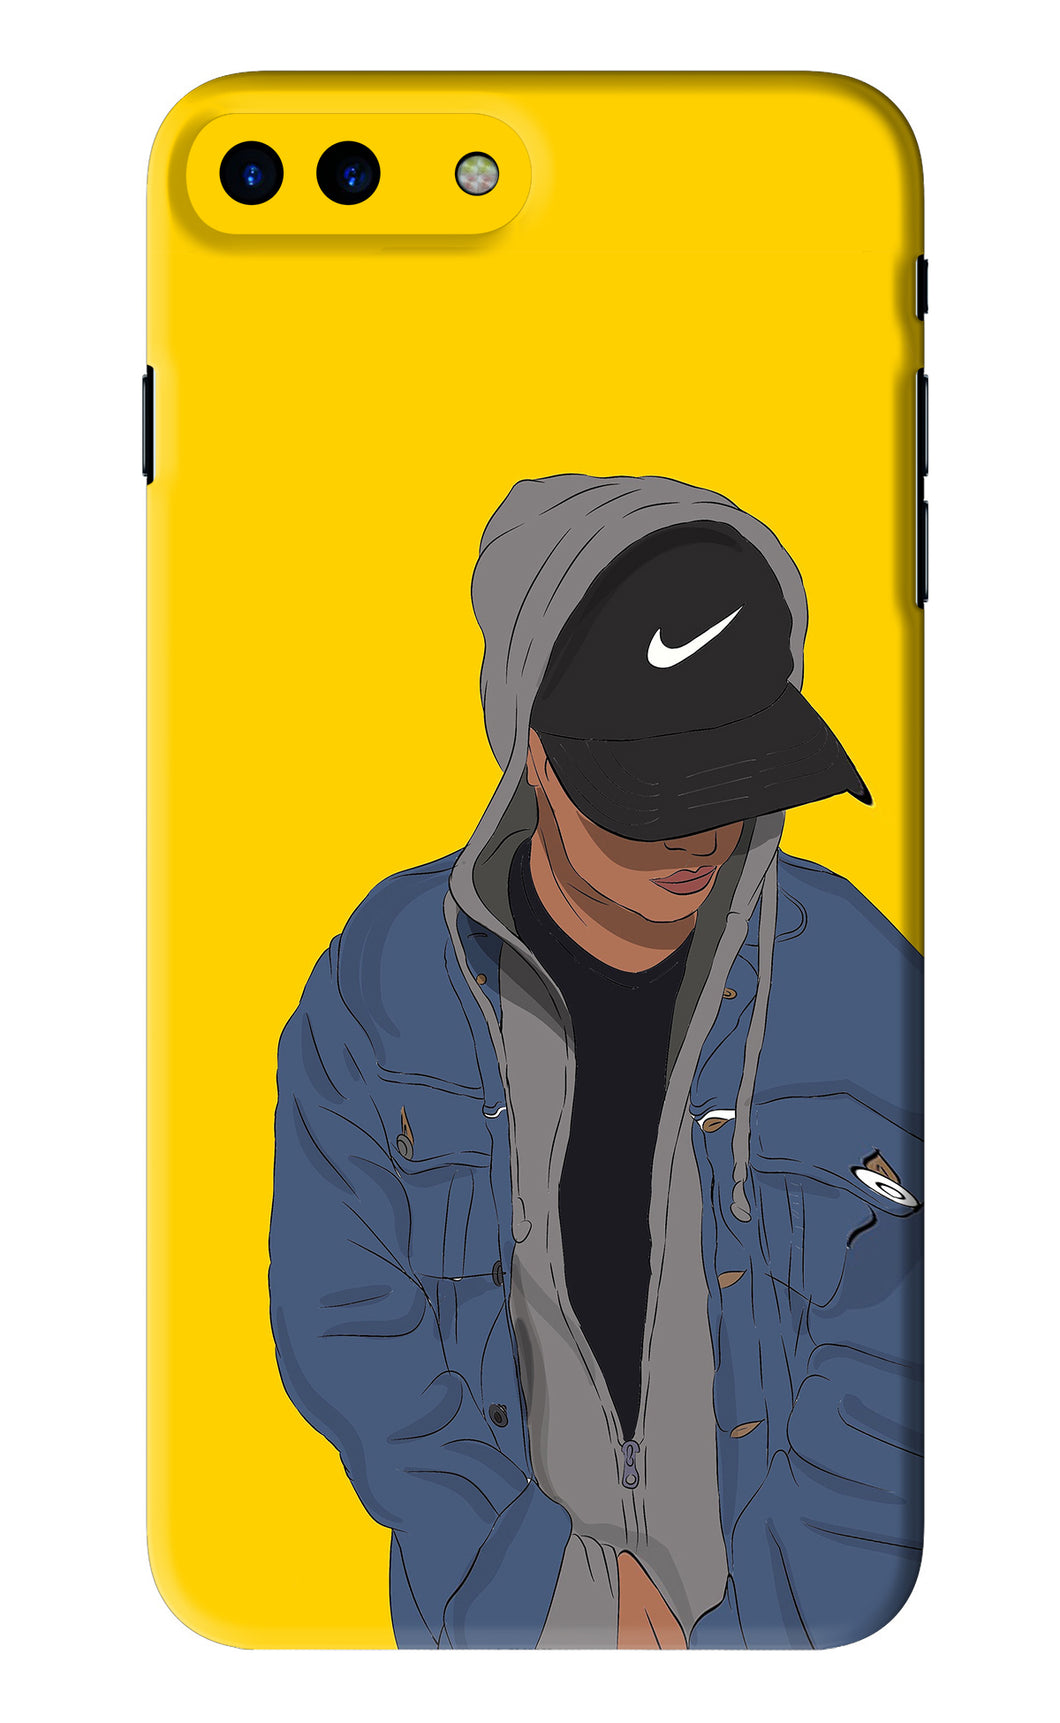 Nike Boy iPhone 8 Plus Back Skin Wrap